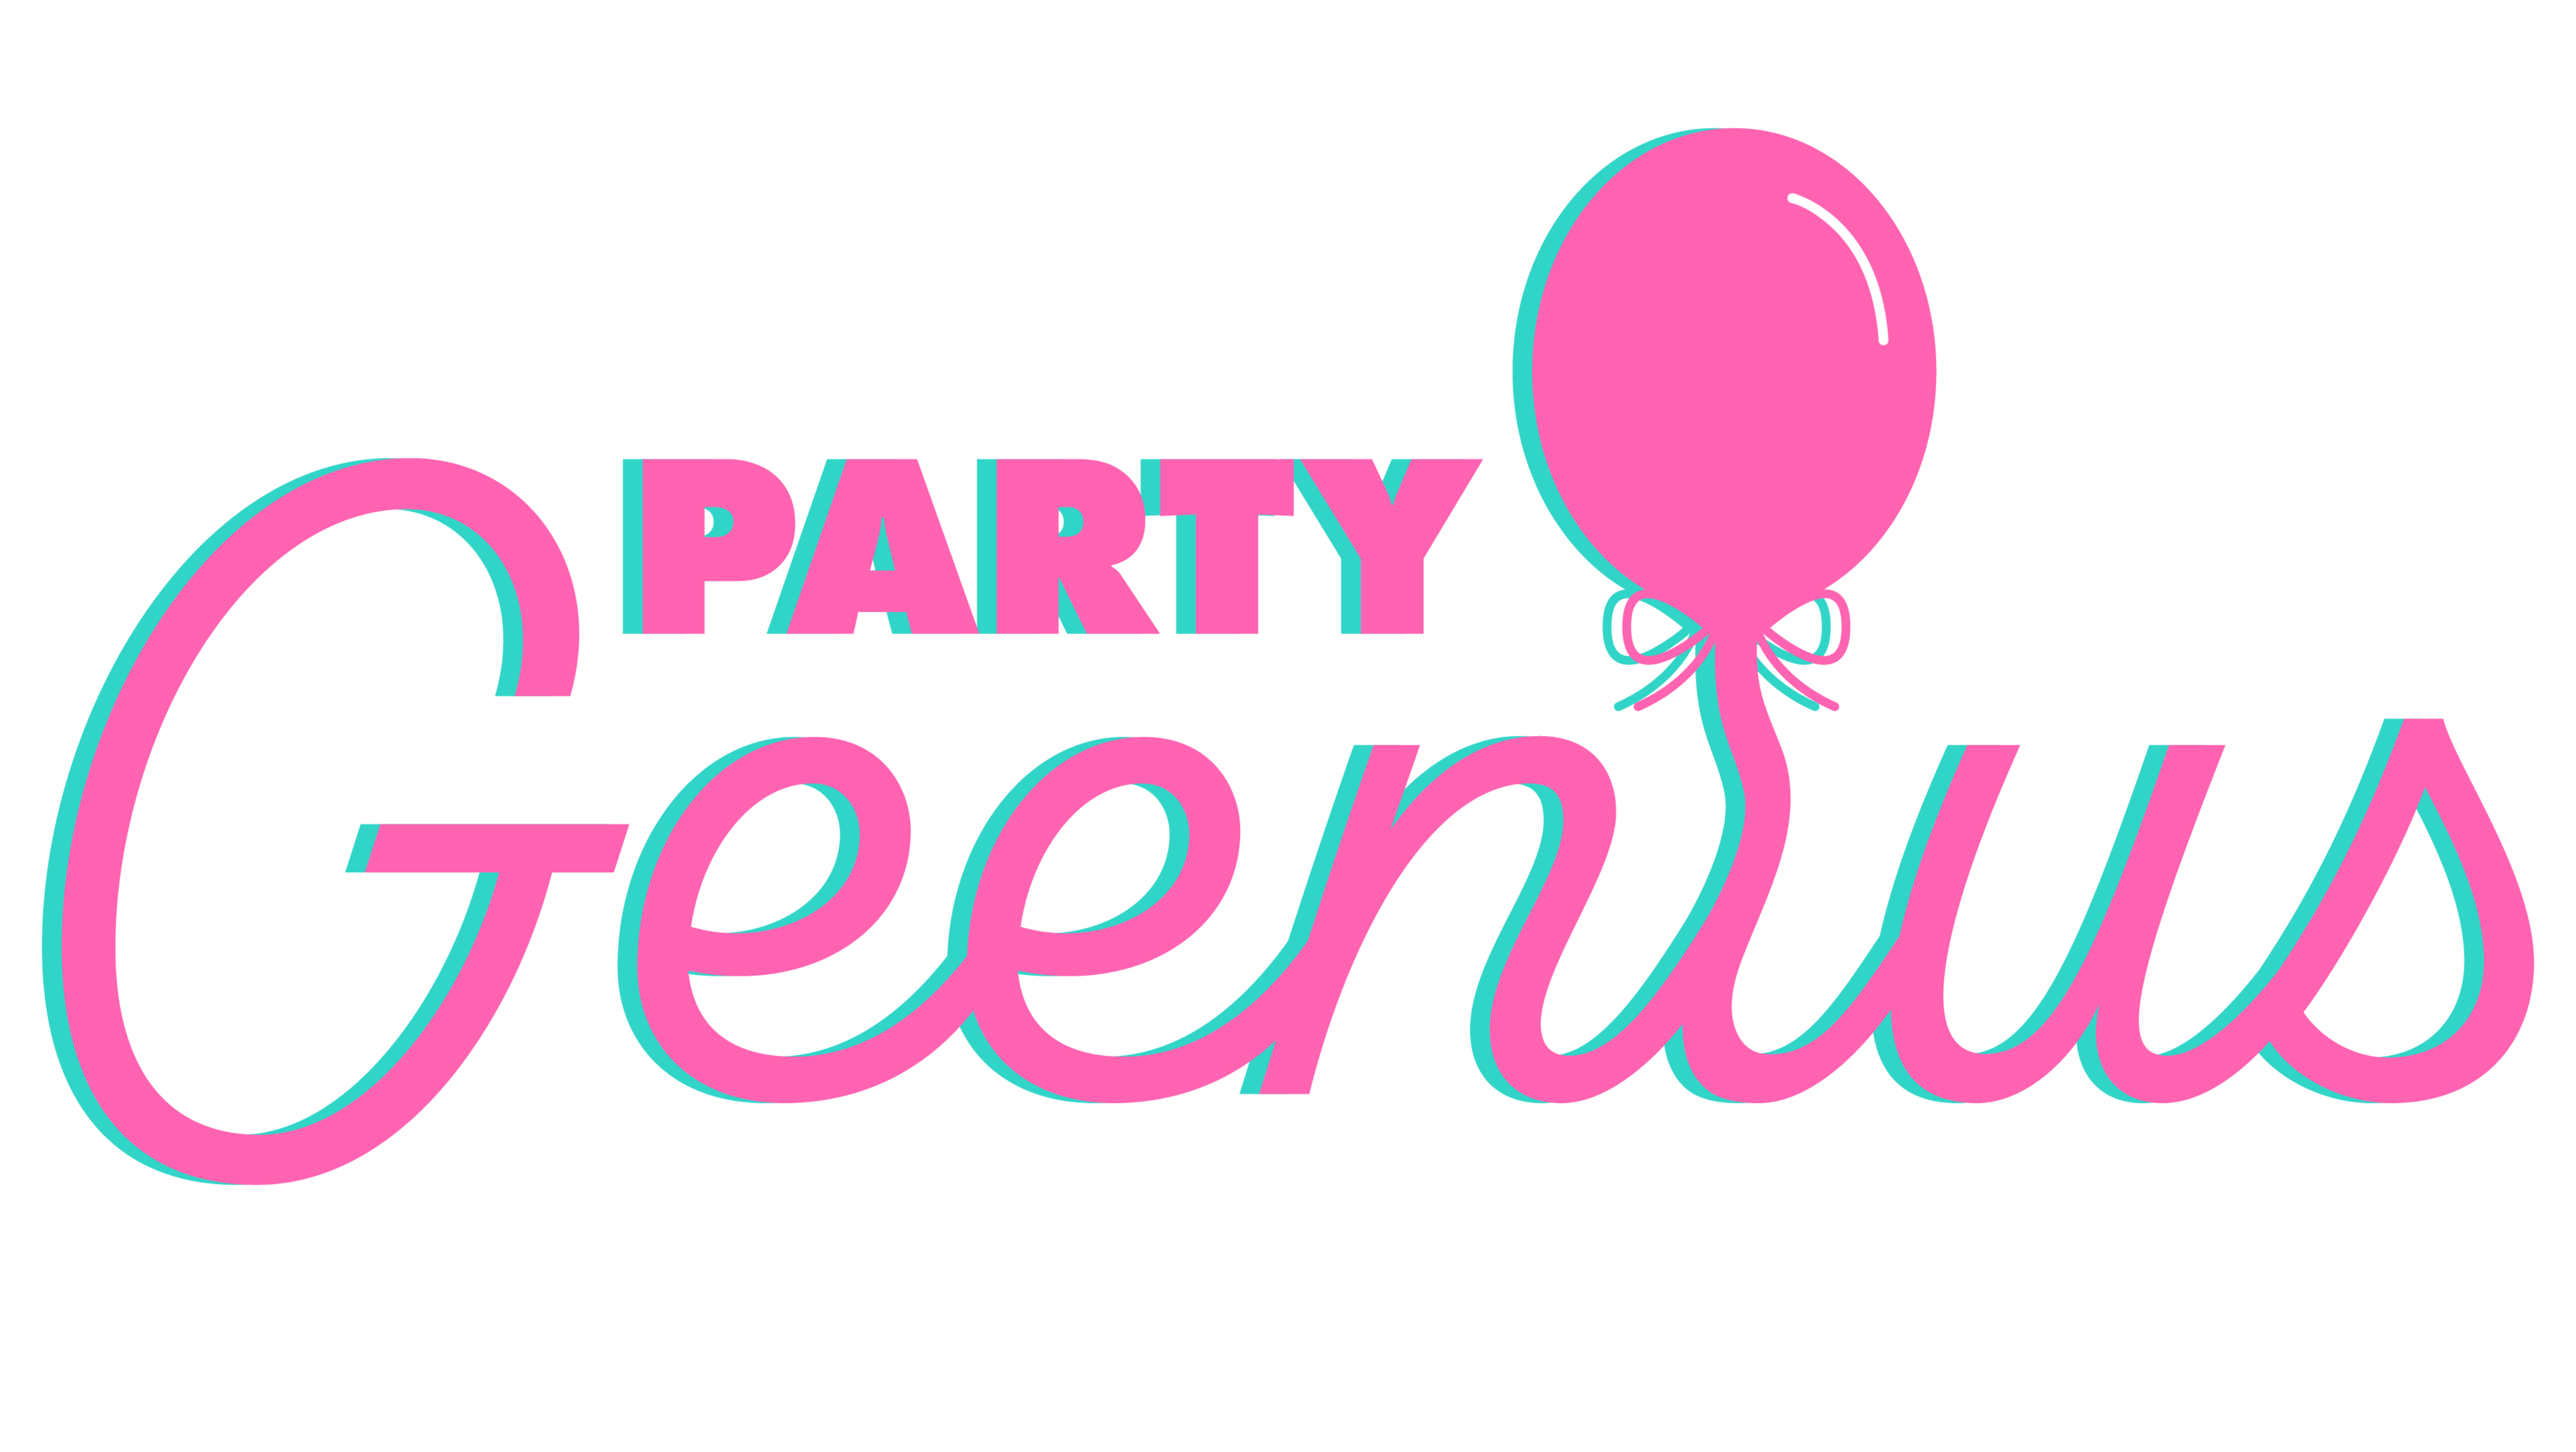 Party Geenius